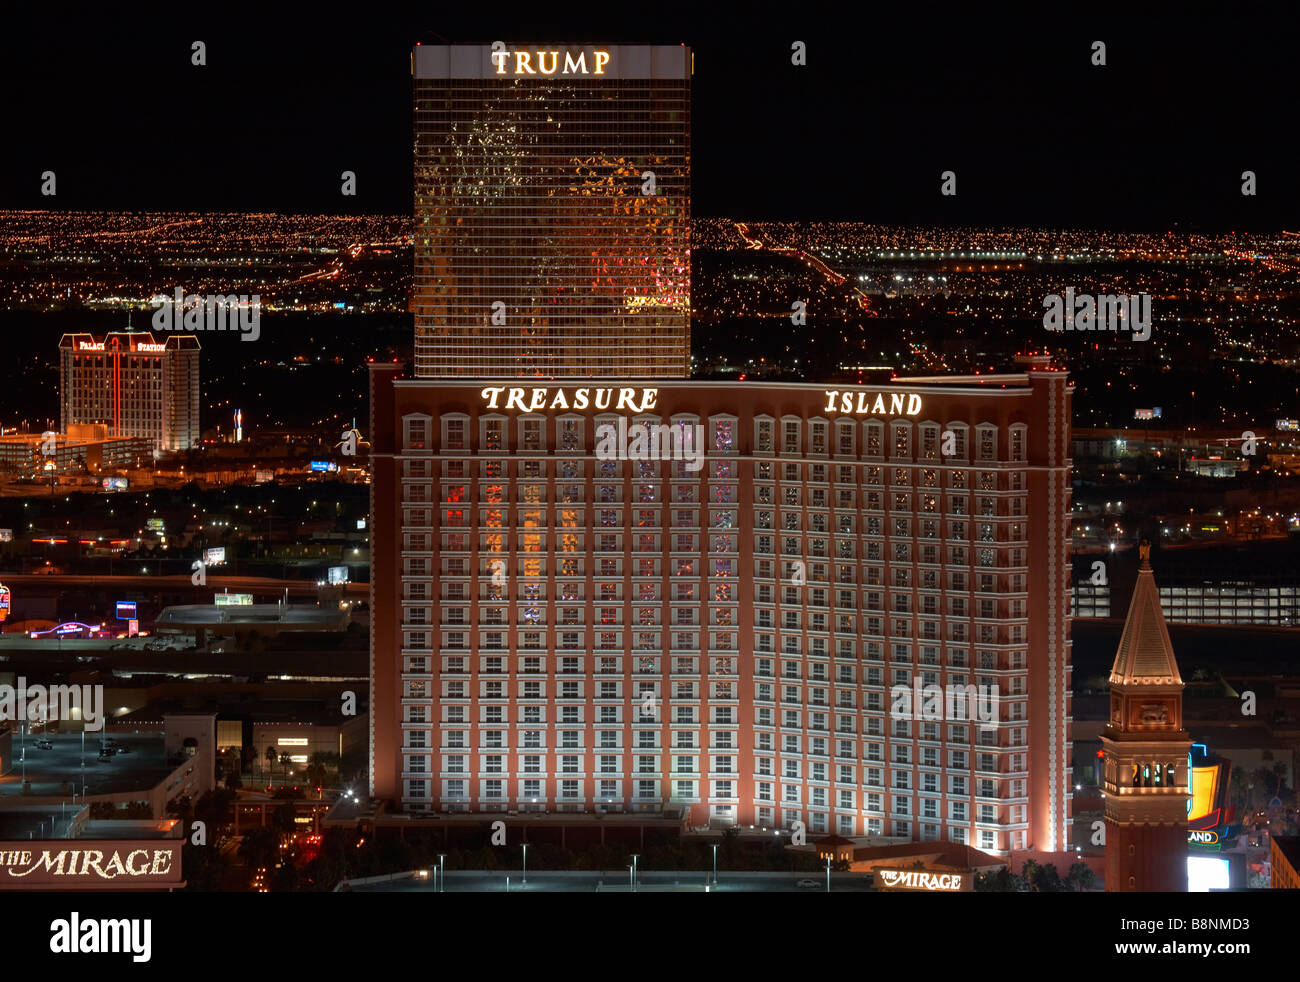 Trump and Treasure Island - The Strip - Night Scene - Las Vegas Stock Photo